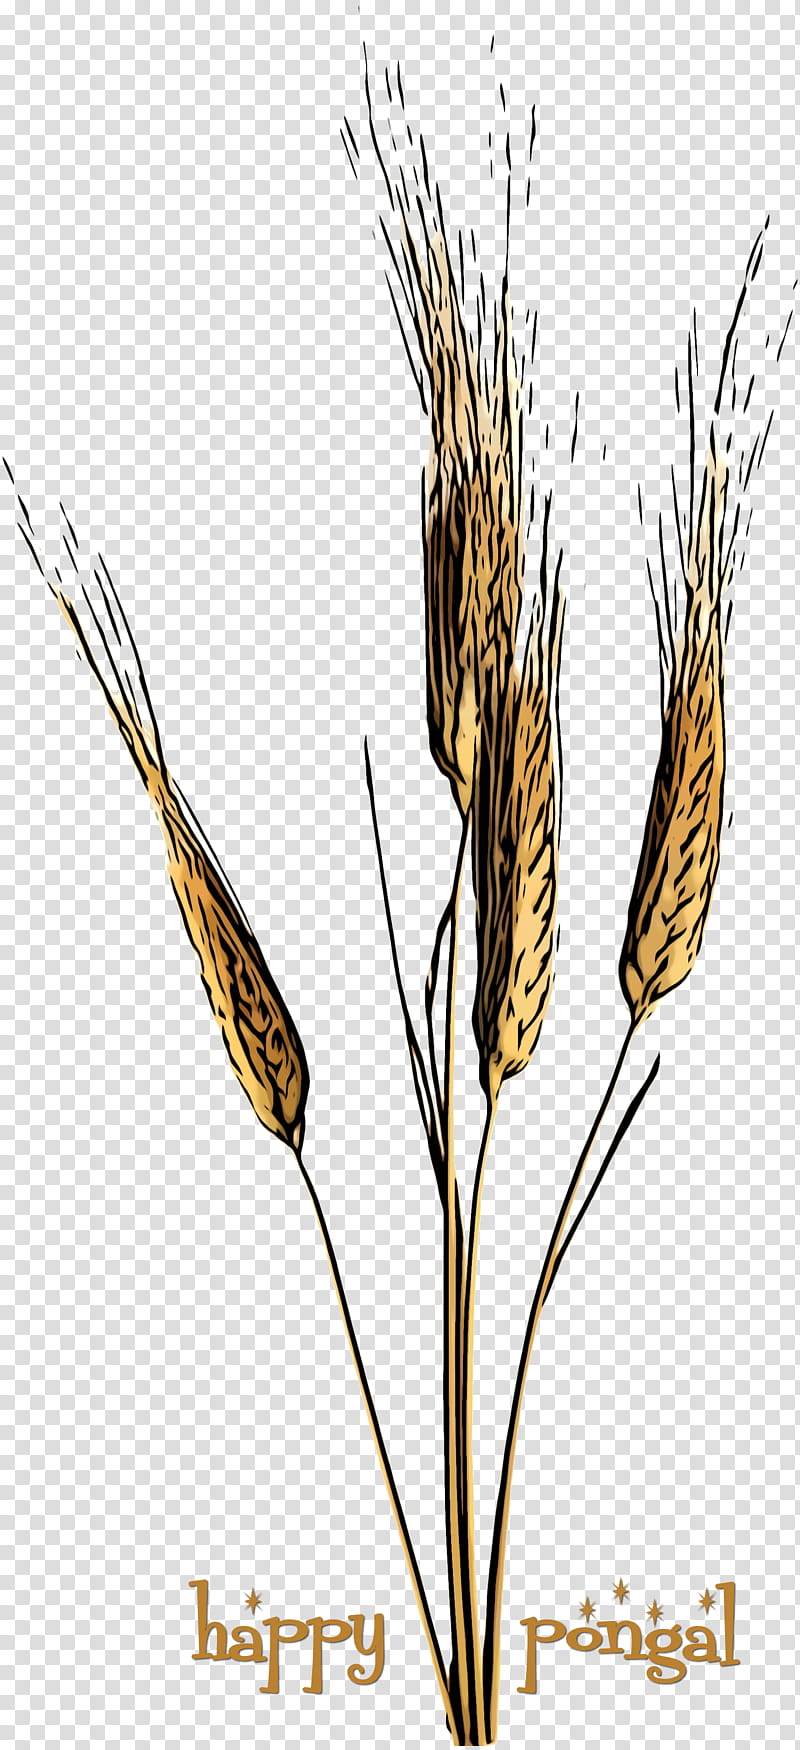 Wheat, Plant, Elymus Repens, Flowering Plant, Food Grain, Hordeum, Grass Family, Triticale transparent background PNG clipart